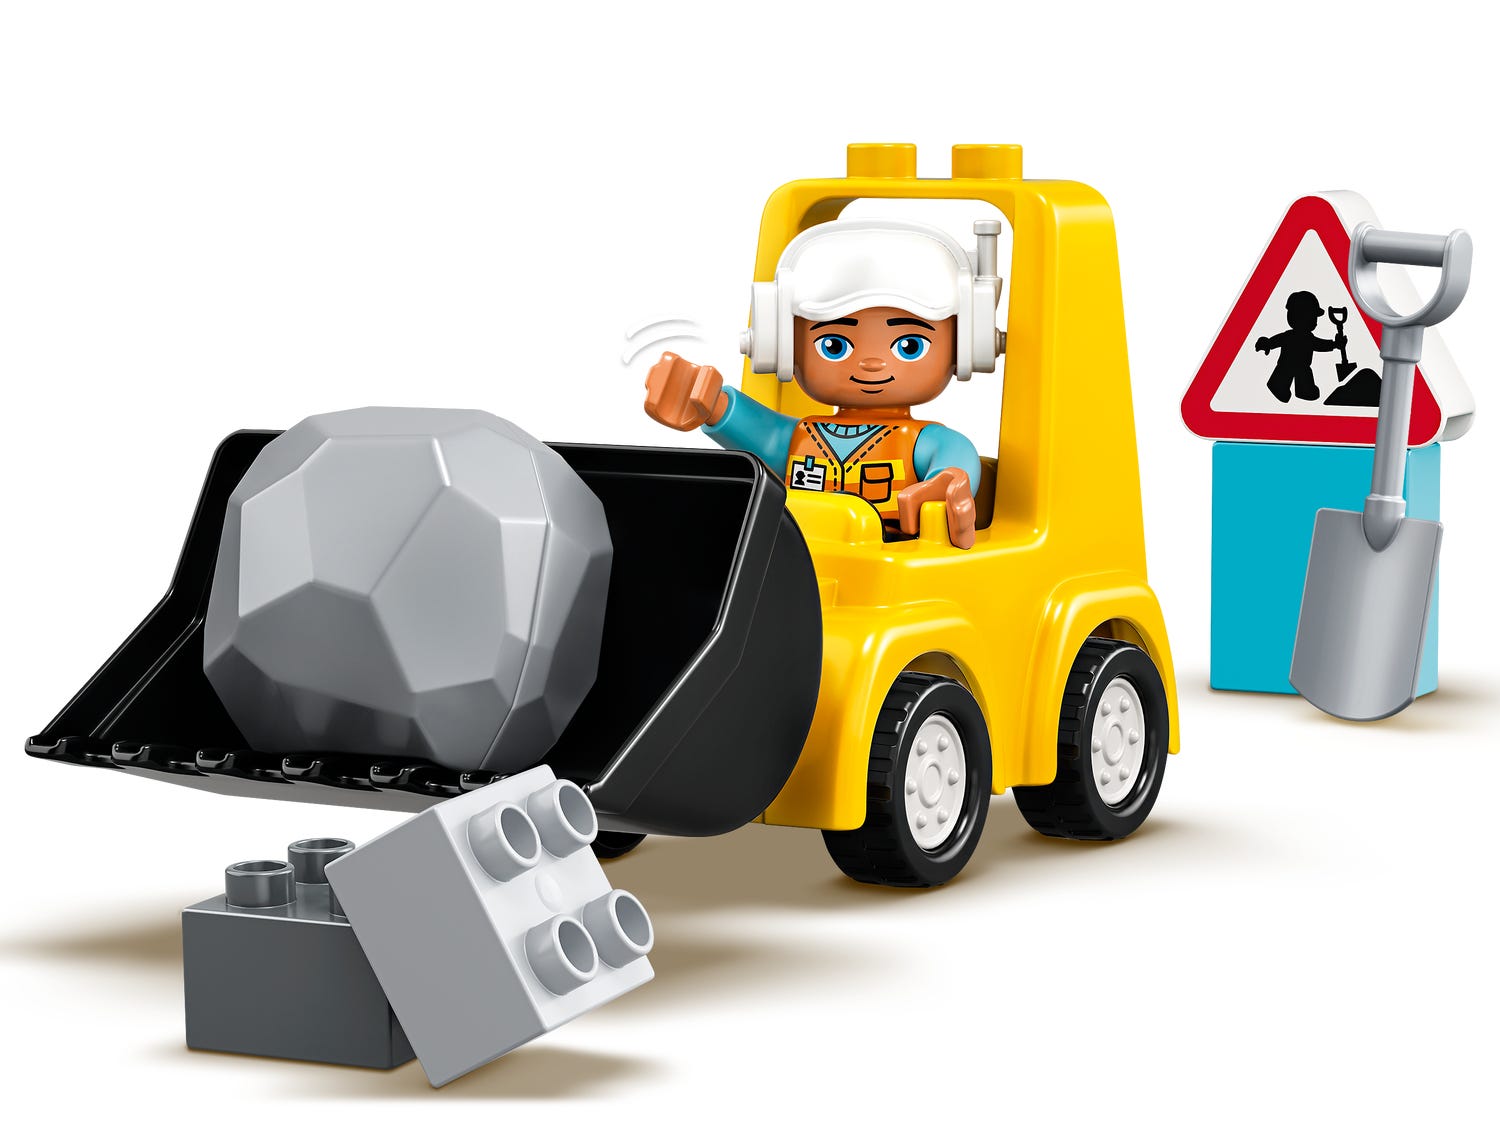 Lego Duplo - Bulldozer